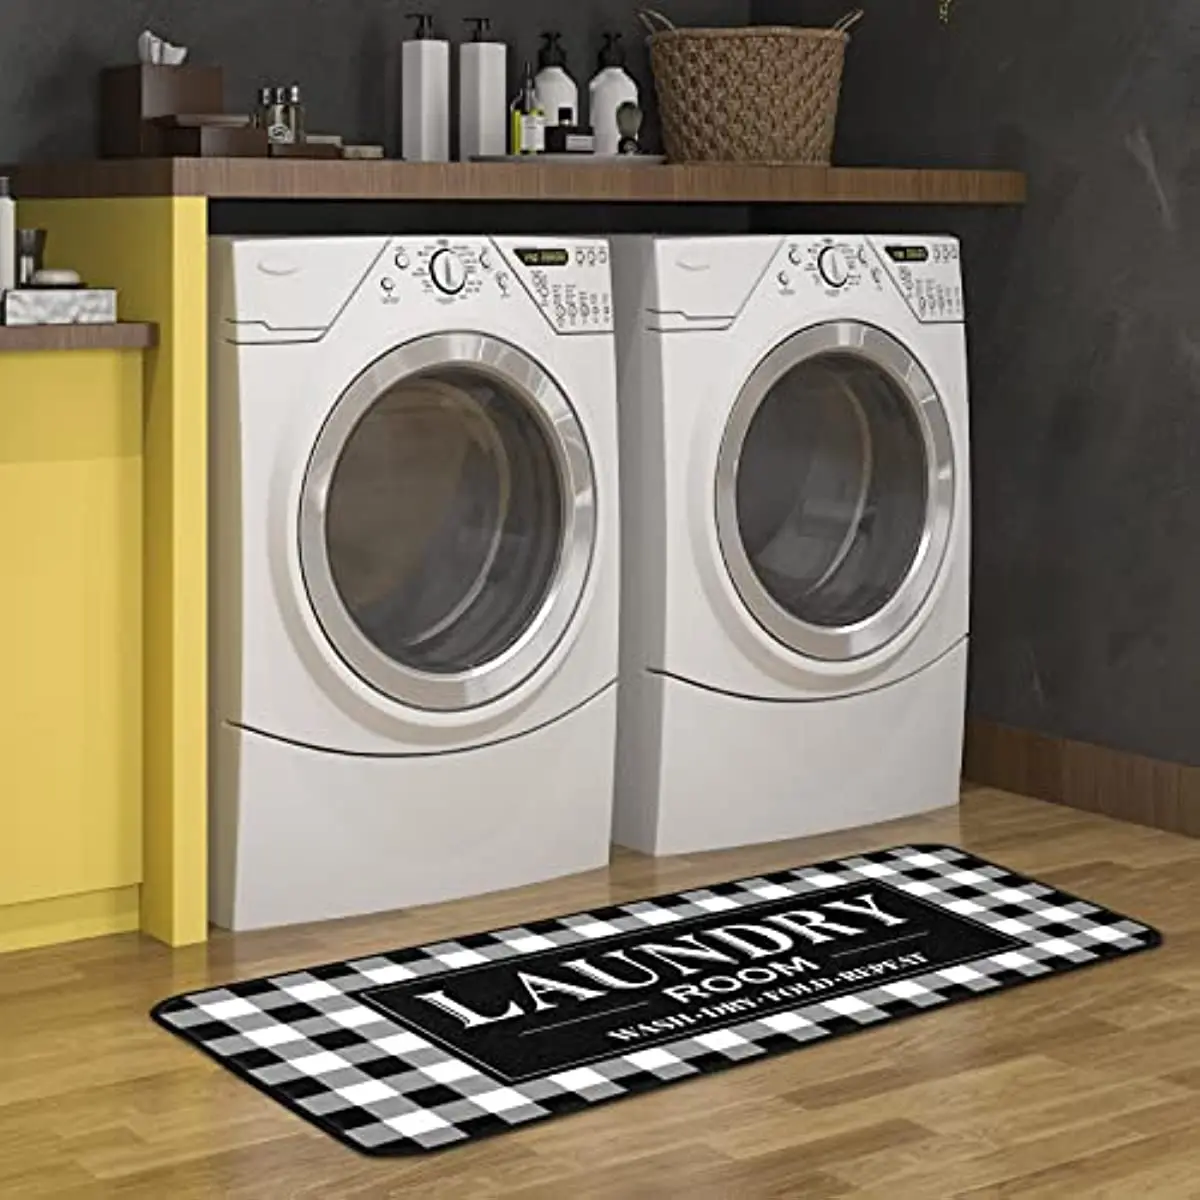 https://ae01.alicdn.com/kf/Sa51f1b550a89481c957e09630a9856e5y/Laundry-Room-Rug-Non-Slip-Laundry-Mats-Mudroom-Laundromat-Runner-Farmhouse-Kitchen-Floor-Mat-Bathroom-Laundry.jpg